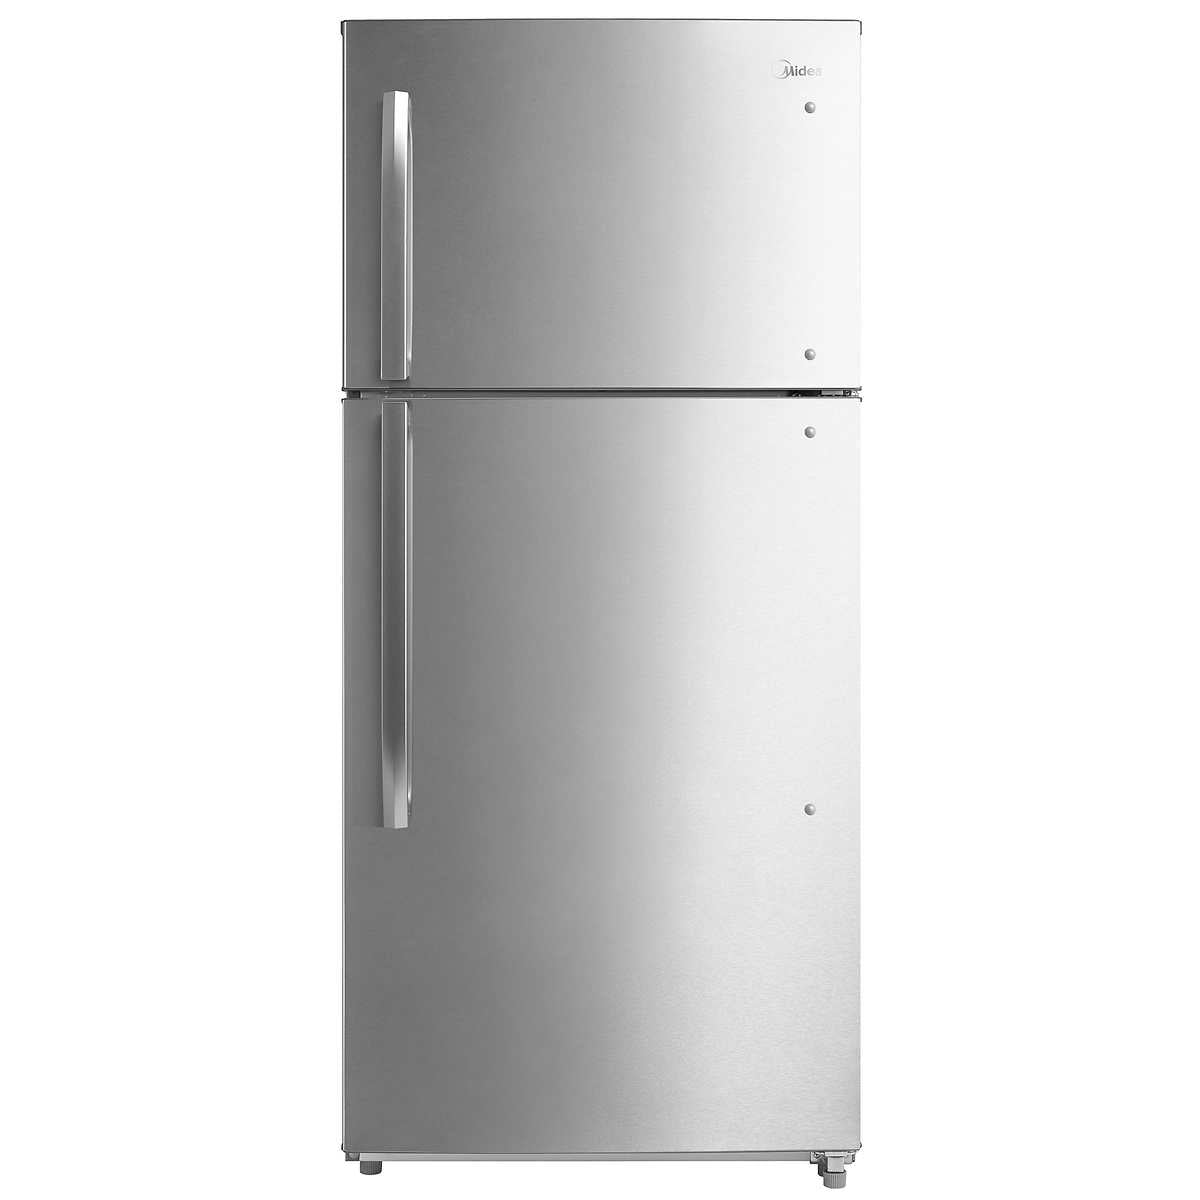 Midea 30 in. 18 cu. ft. Stainless Steel Top Mount Refrigerator